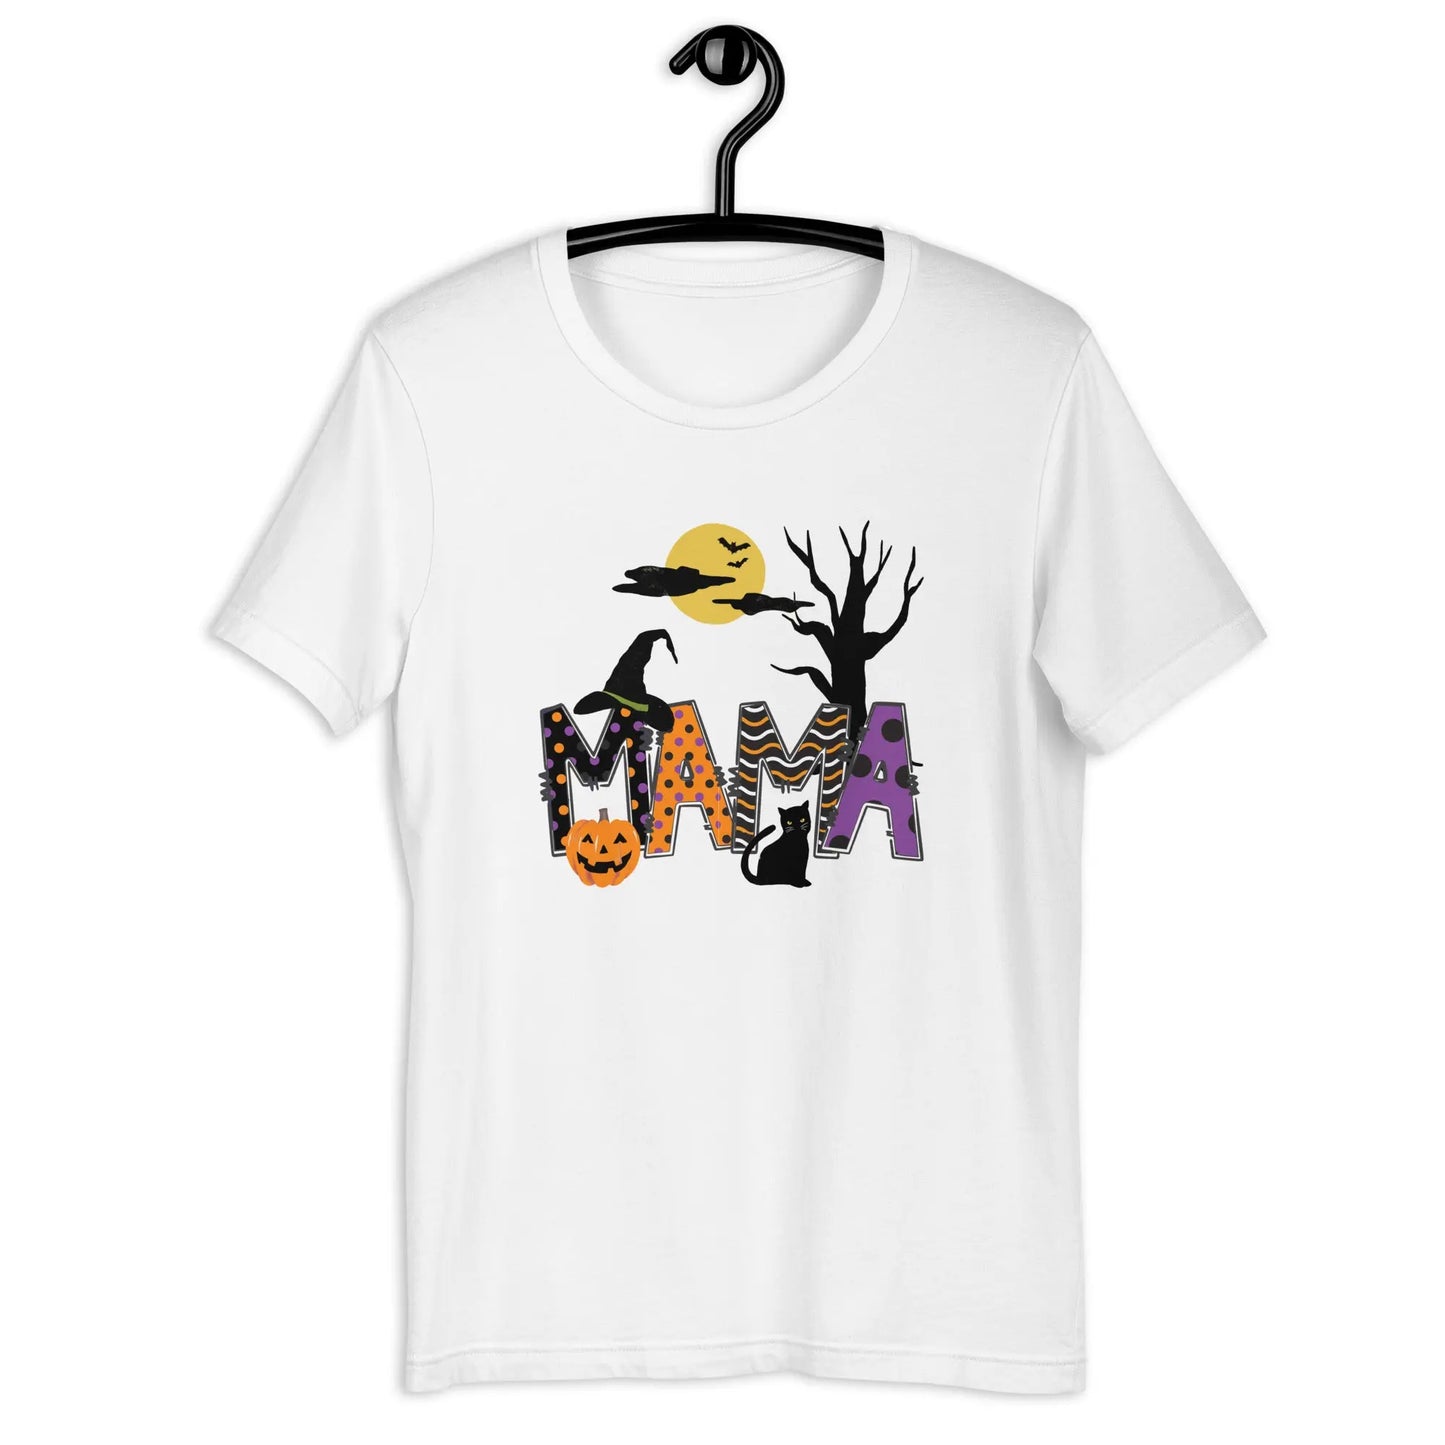 Halloween Personalized Unisex t-shirt Amazing Faith Designs